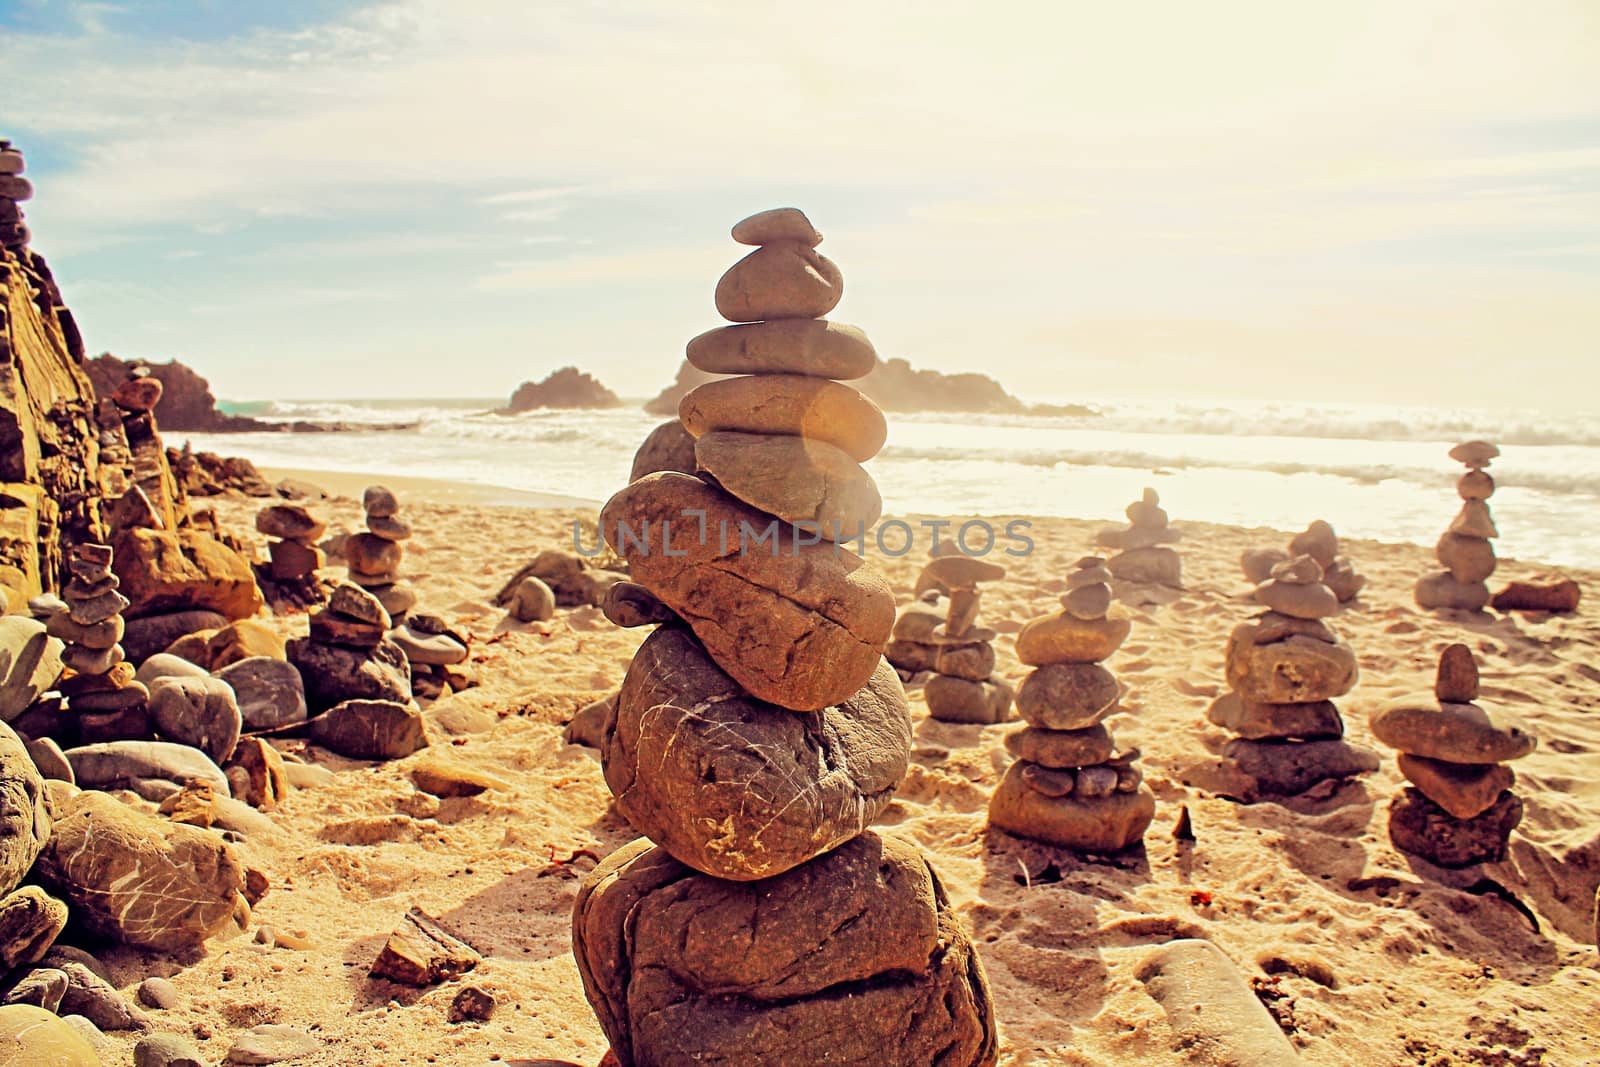 stone balancing at the beach by Timmi